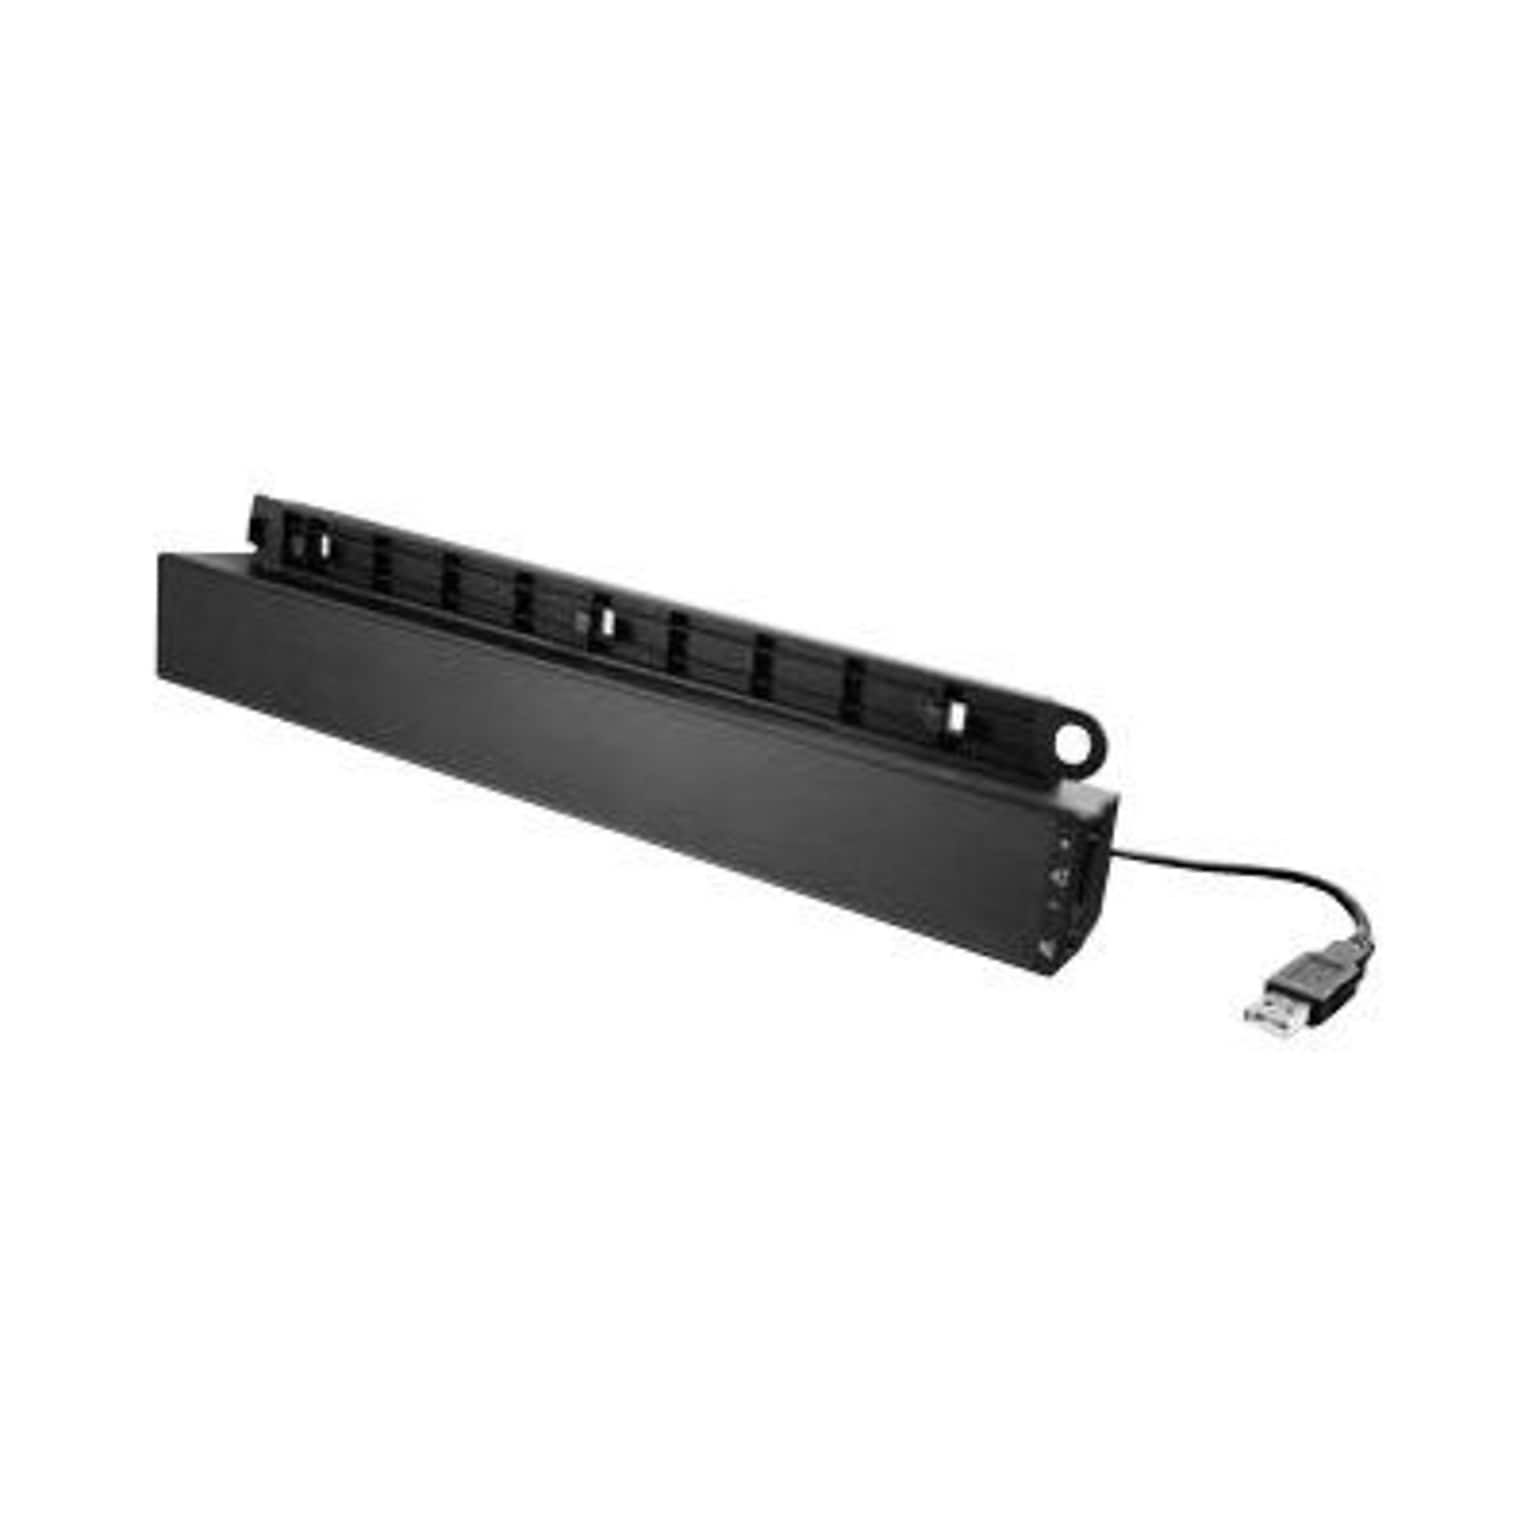 Lenovo® 0A36190 USB Soundbar